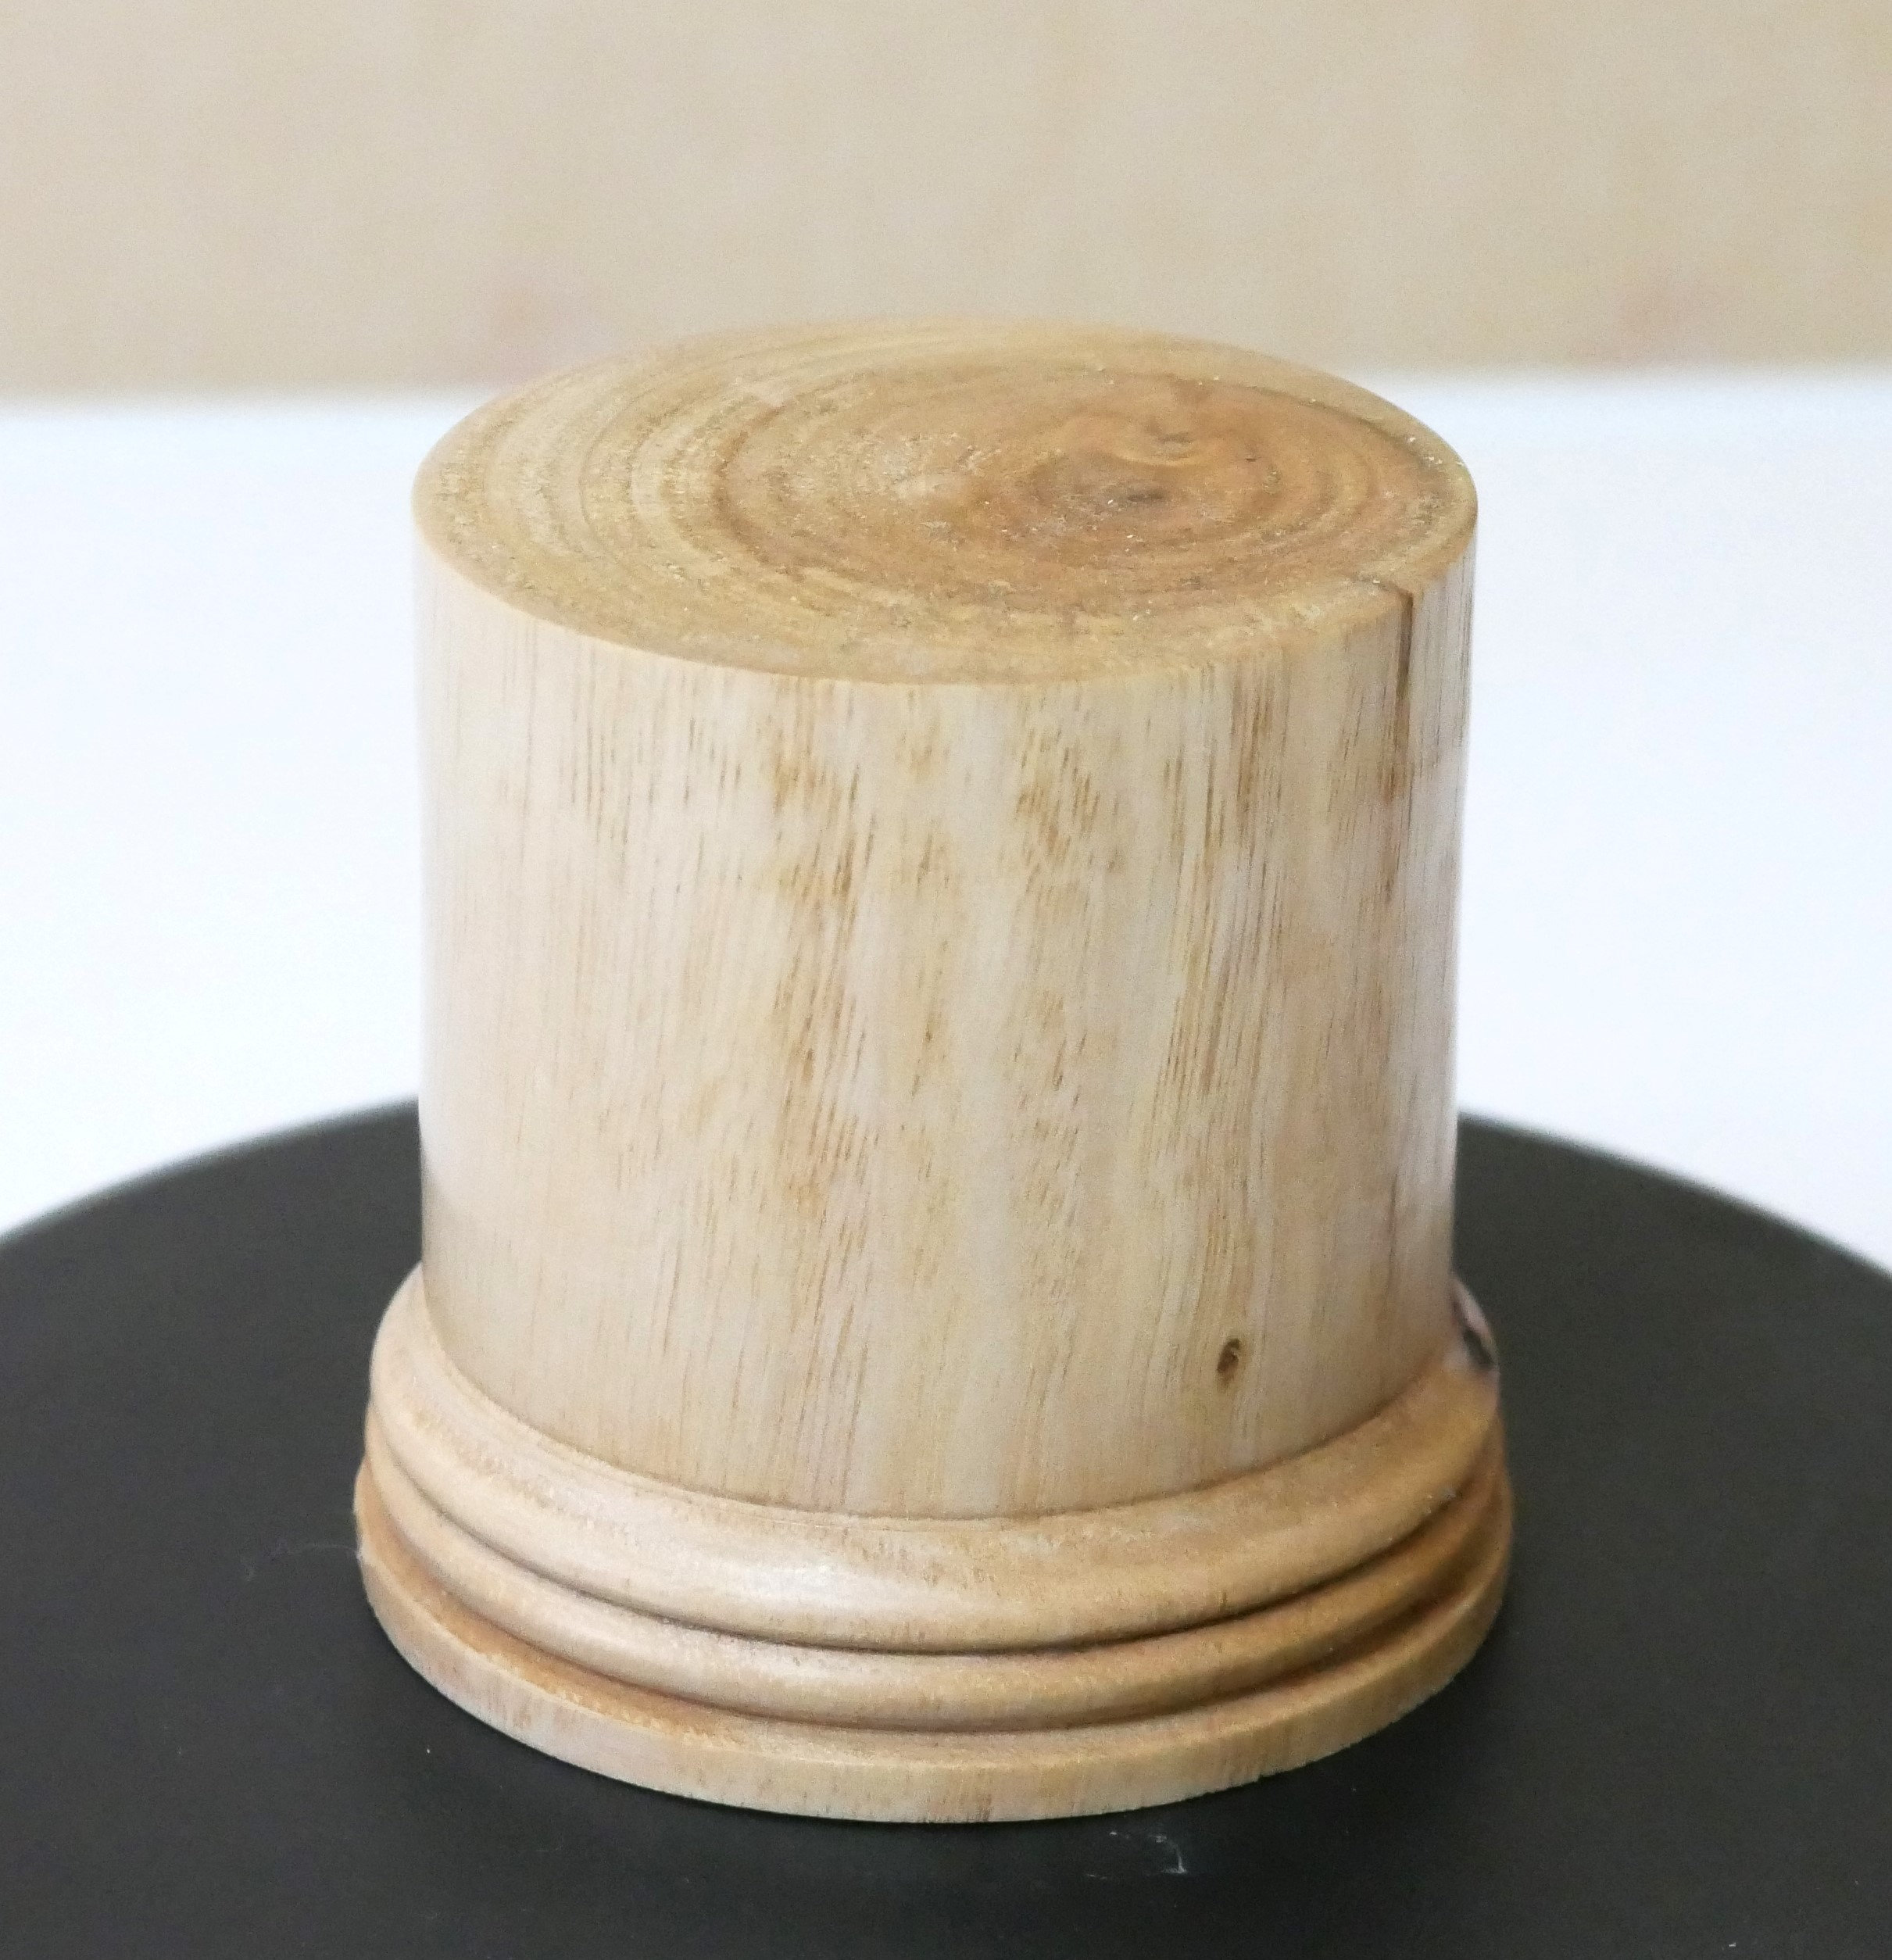 Peanas ovaladas madera. En madera de pino crudo. Bordes torneados. Ideal  para pintar. Manualidades y decoración (Ovalada 35)